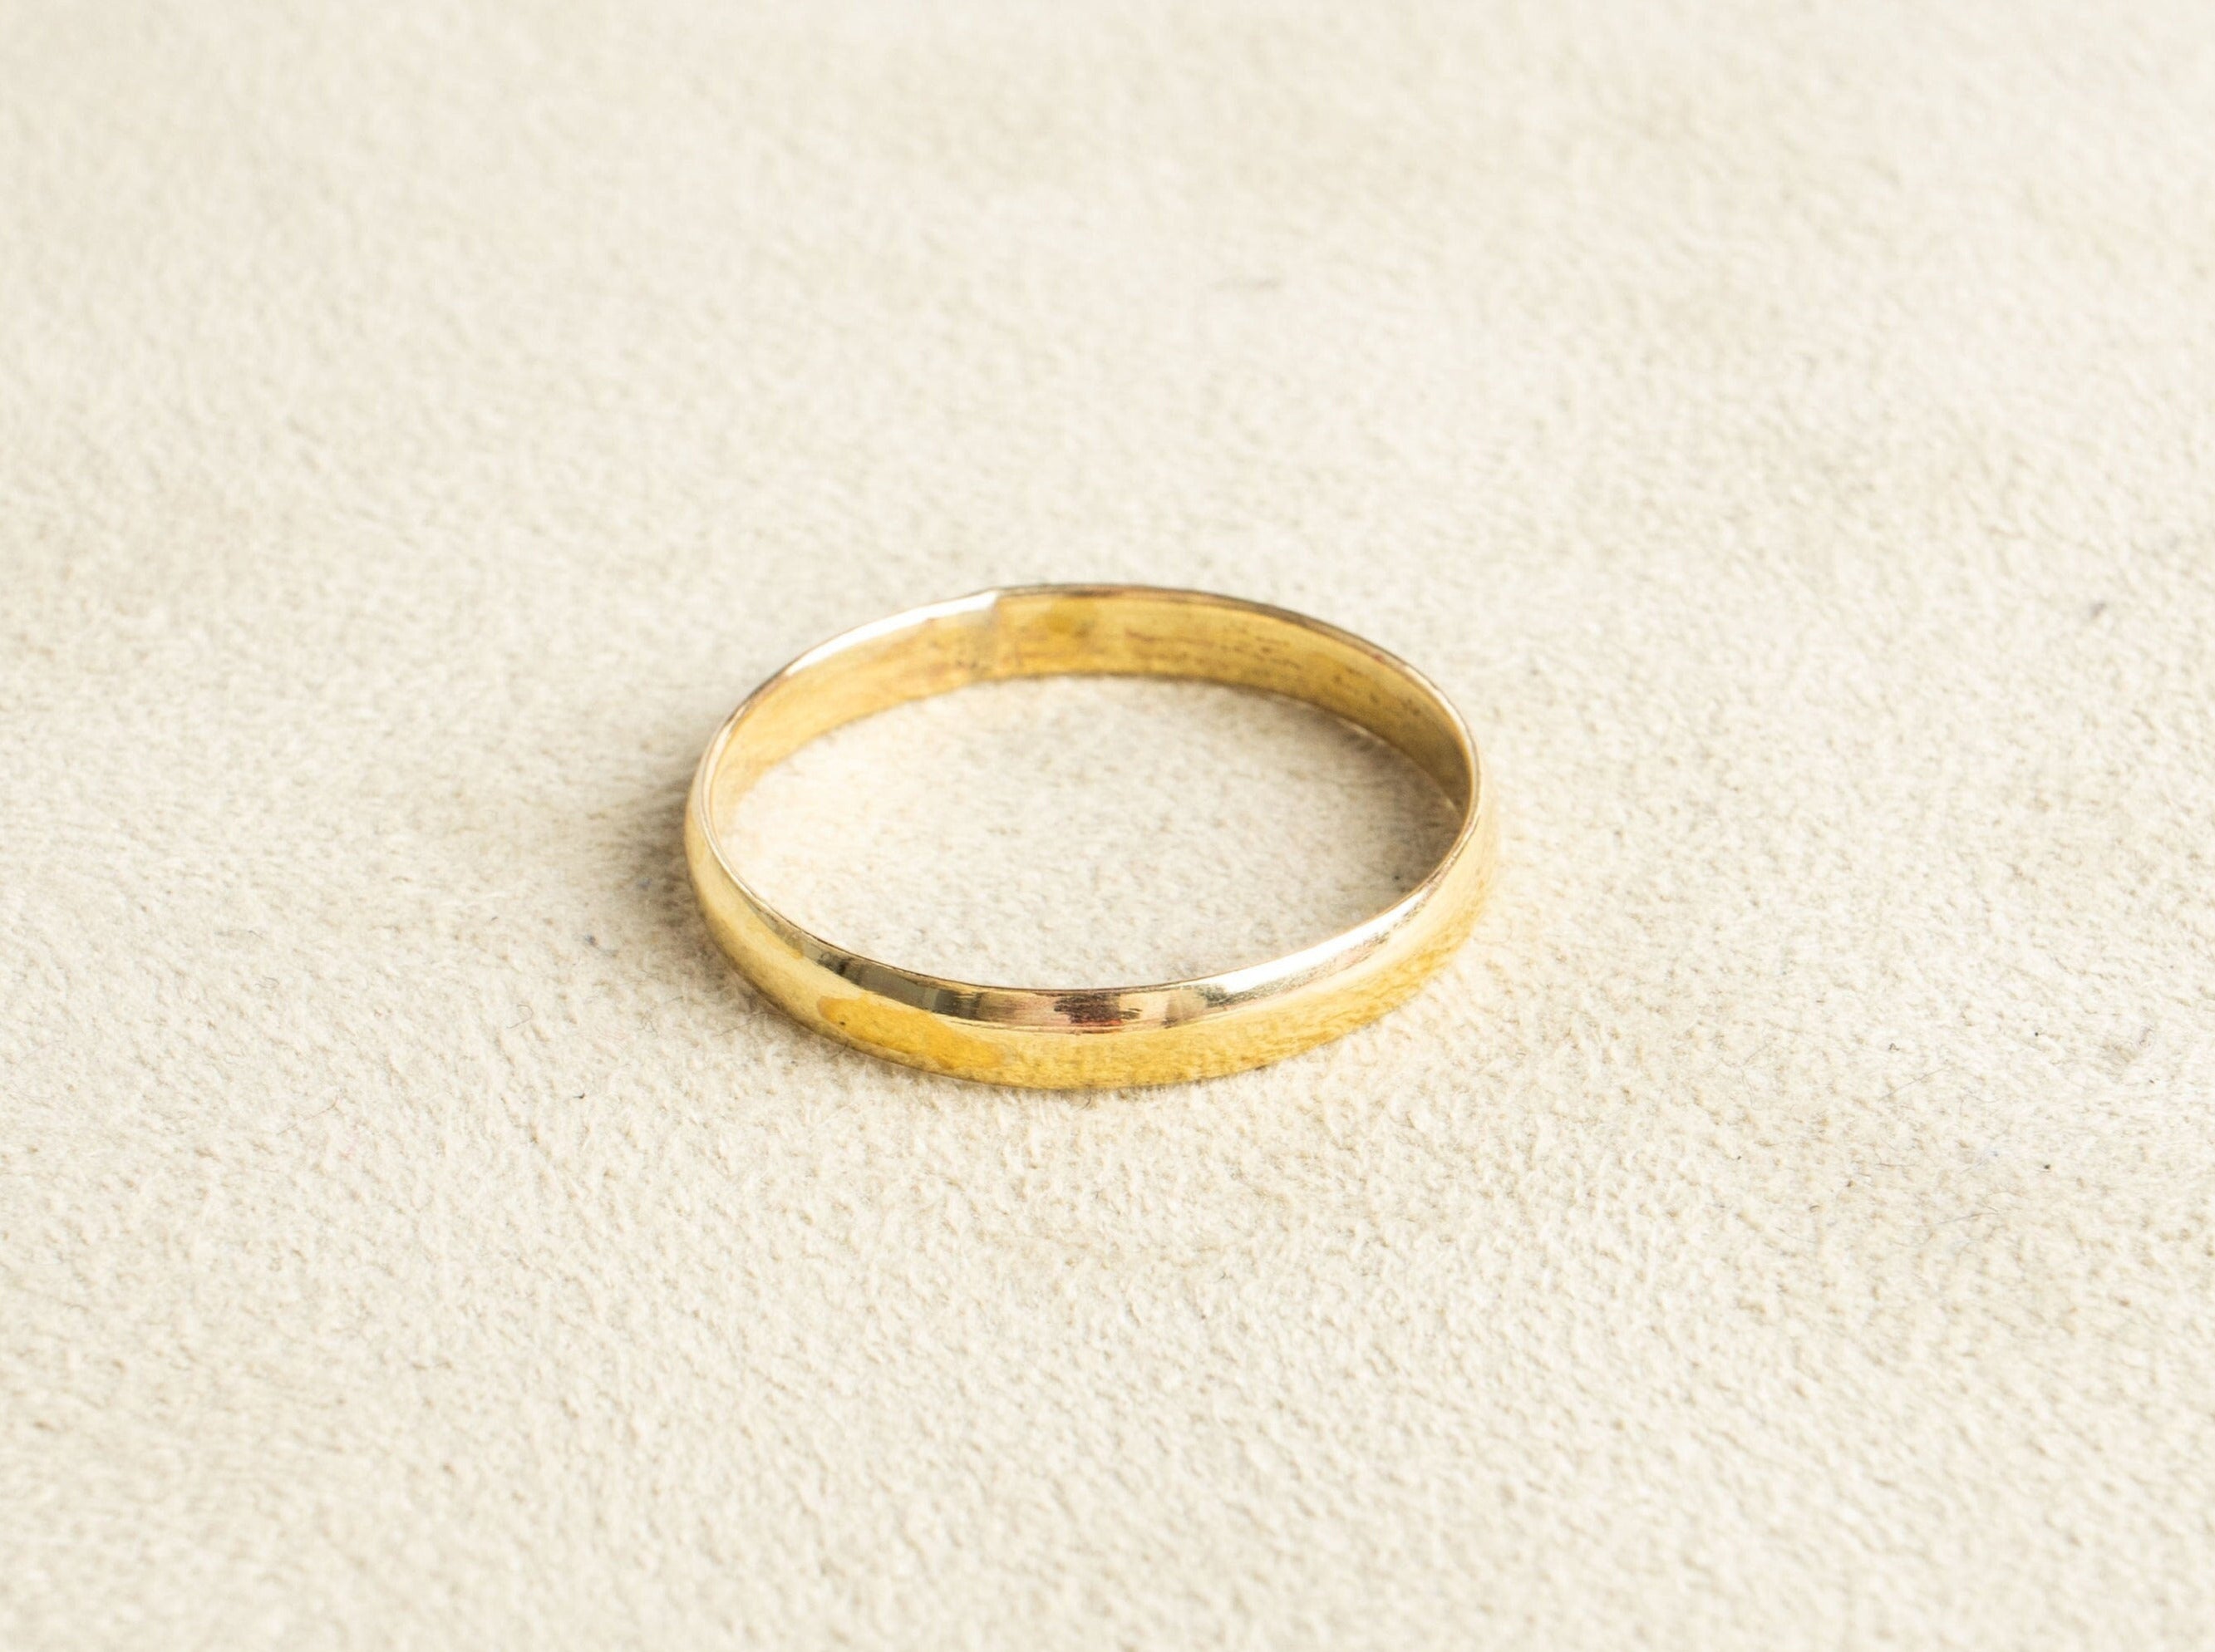 Simpler Ring Messing gold Ehering handgemacht